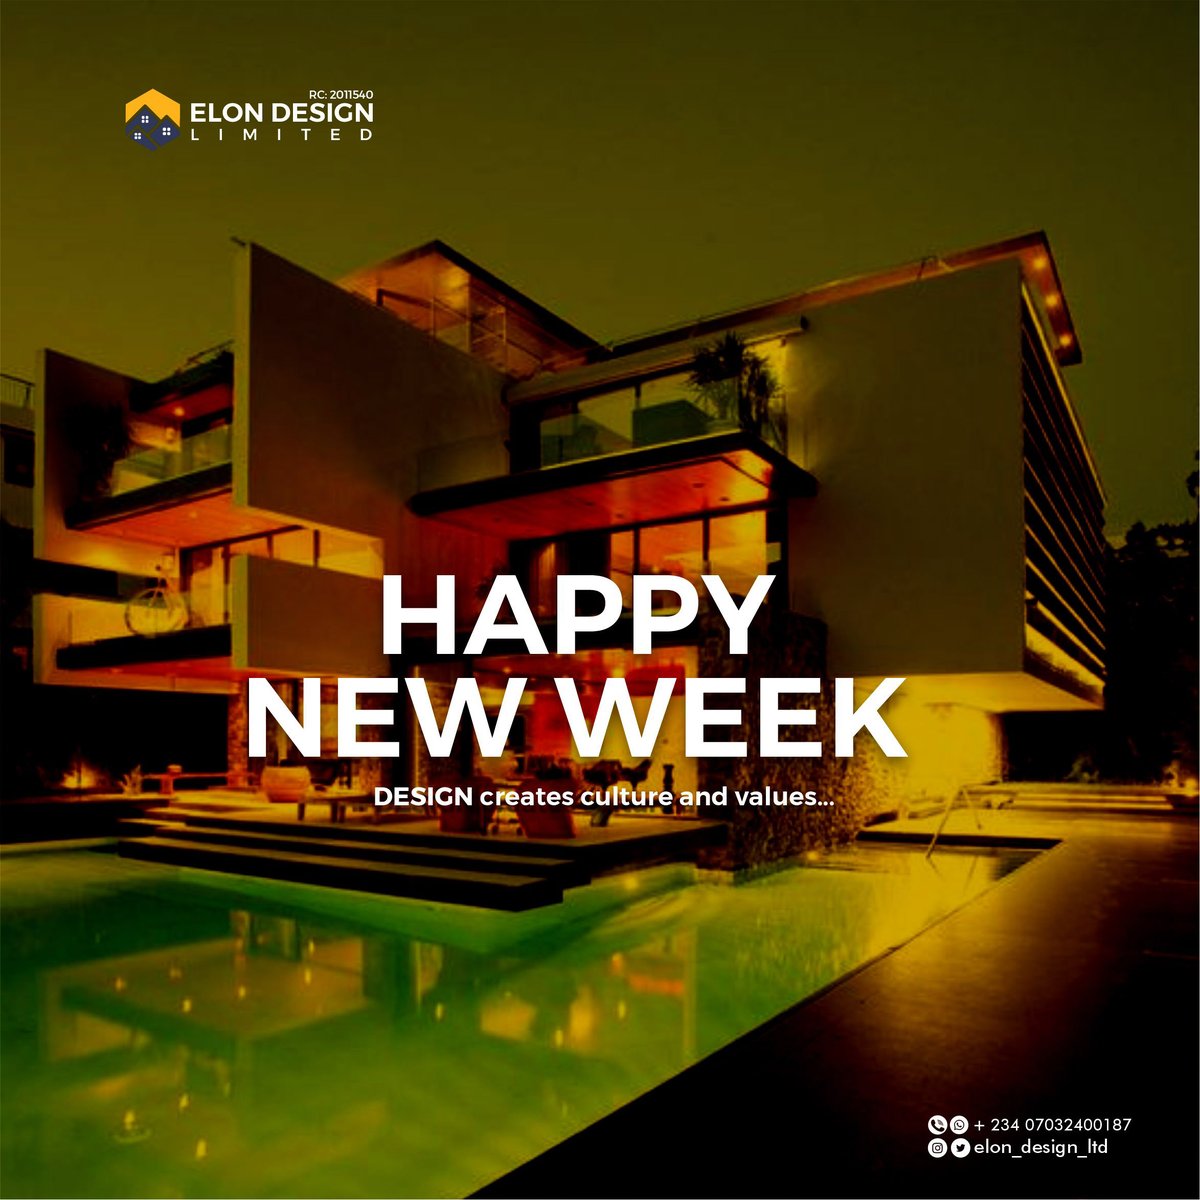 Happy New Week

#ElonDesign #InteriorDesign #SwimmingPool #ArchitectureDesign #Architecture